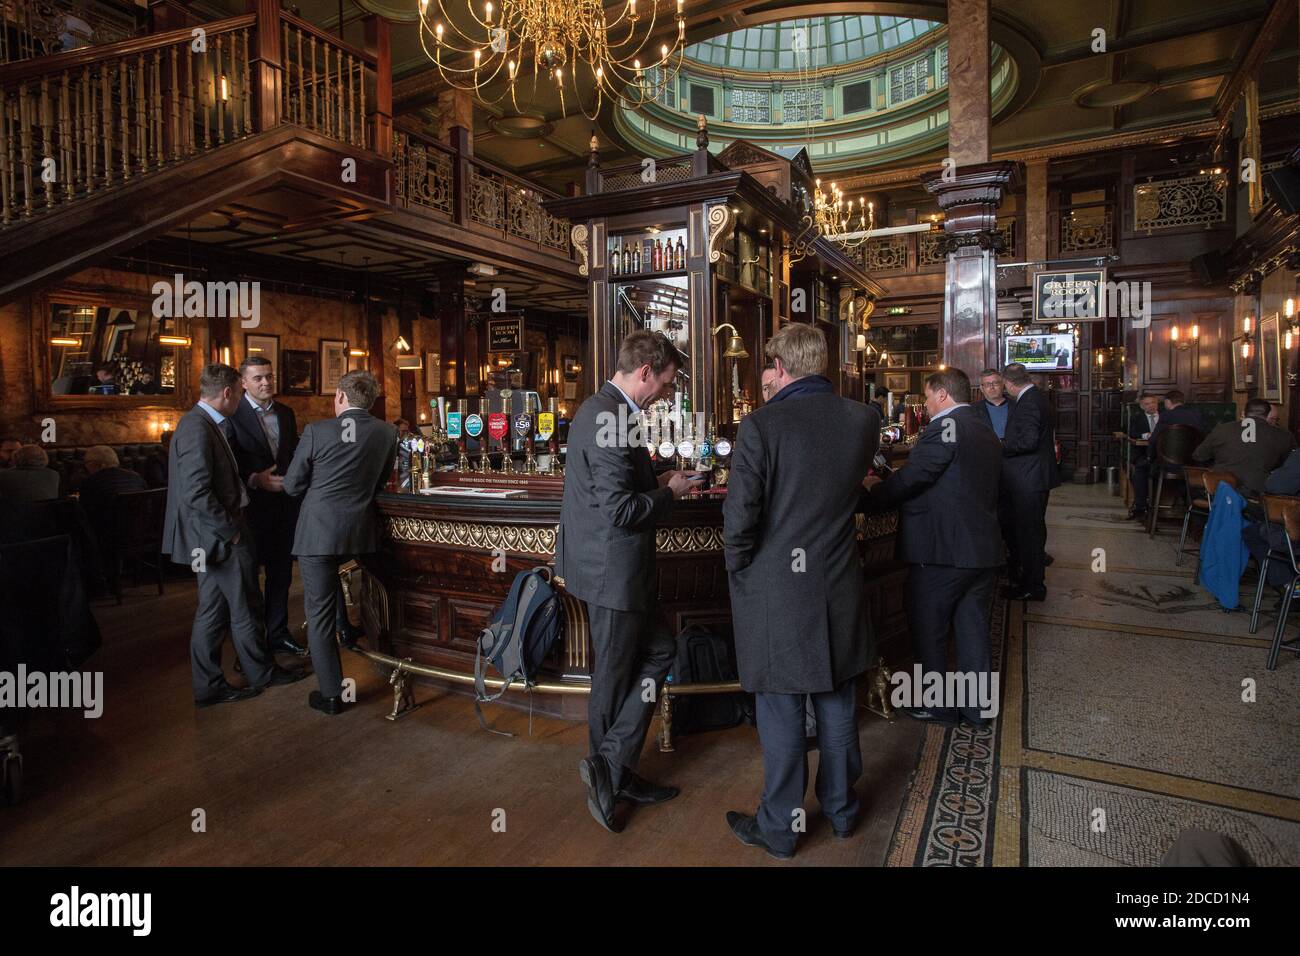 Großbritannien / England /London /City of London / City of London Arbeiter trinken im Counting House Pub in der City of London, Großbritannien Stockfoto